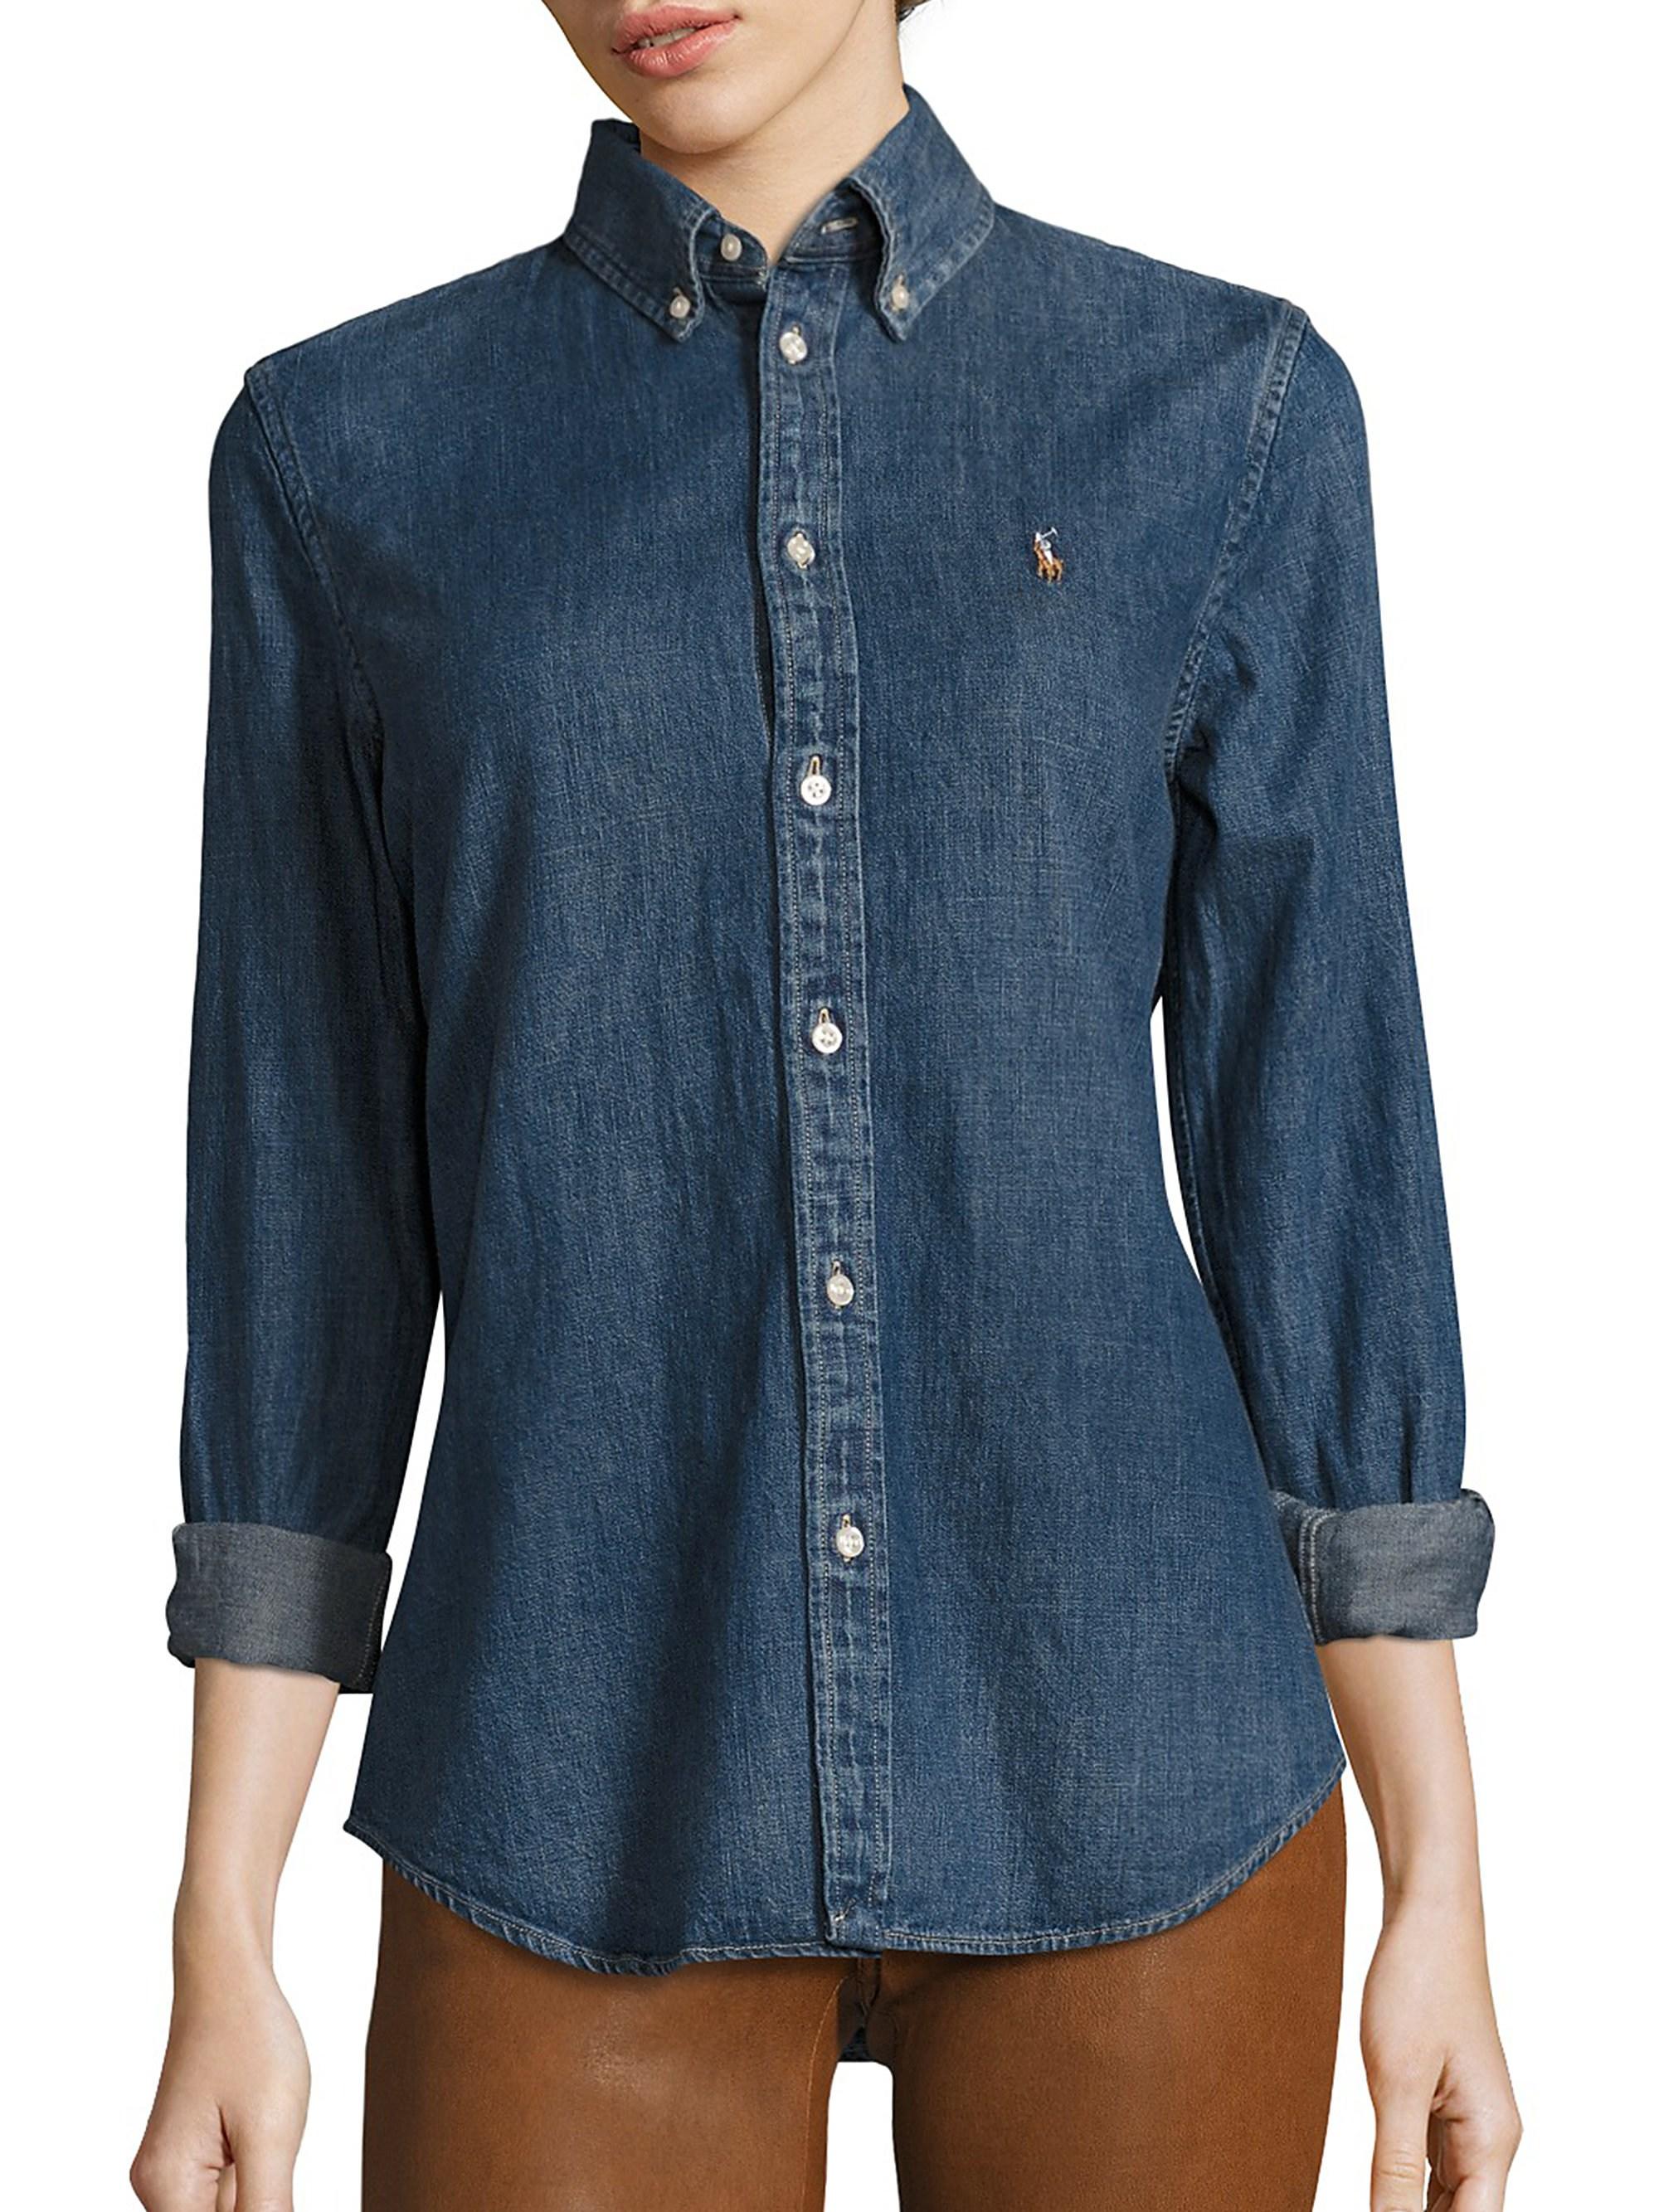 Lyst - Polo Ralph Lauren Women's Denim Shirt - Blaine - Size Xl in Blue